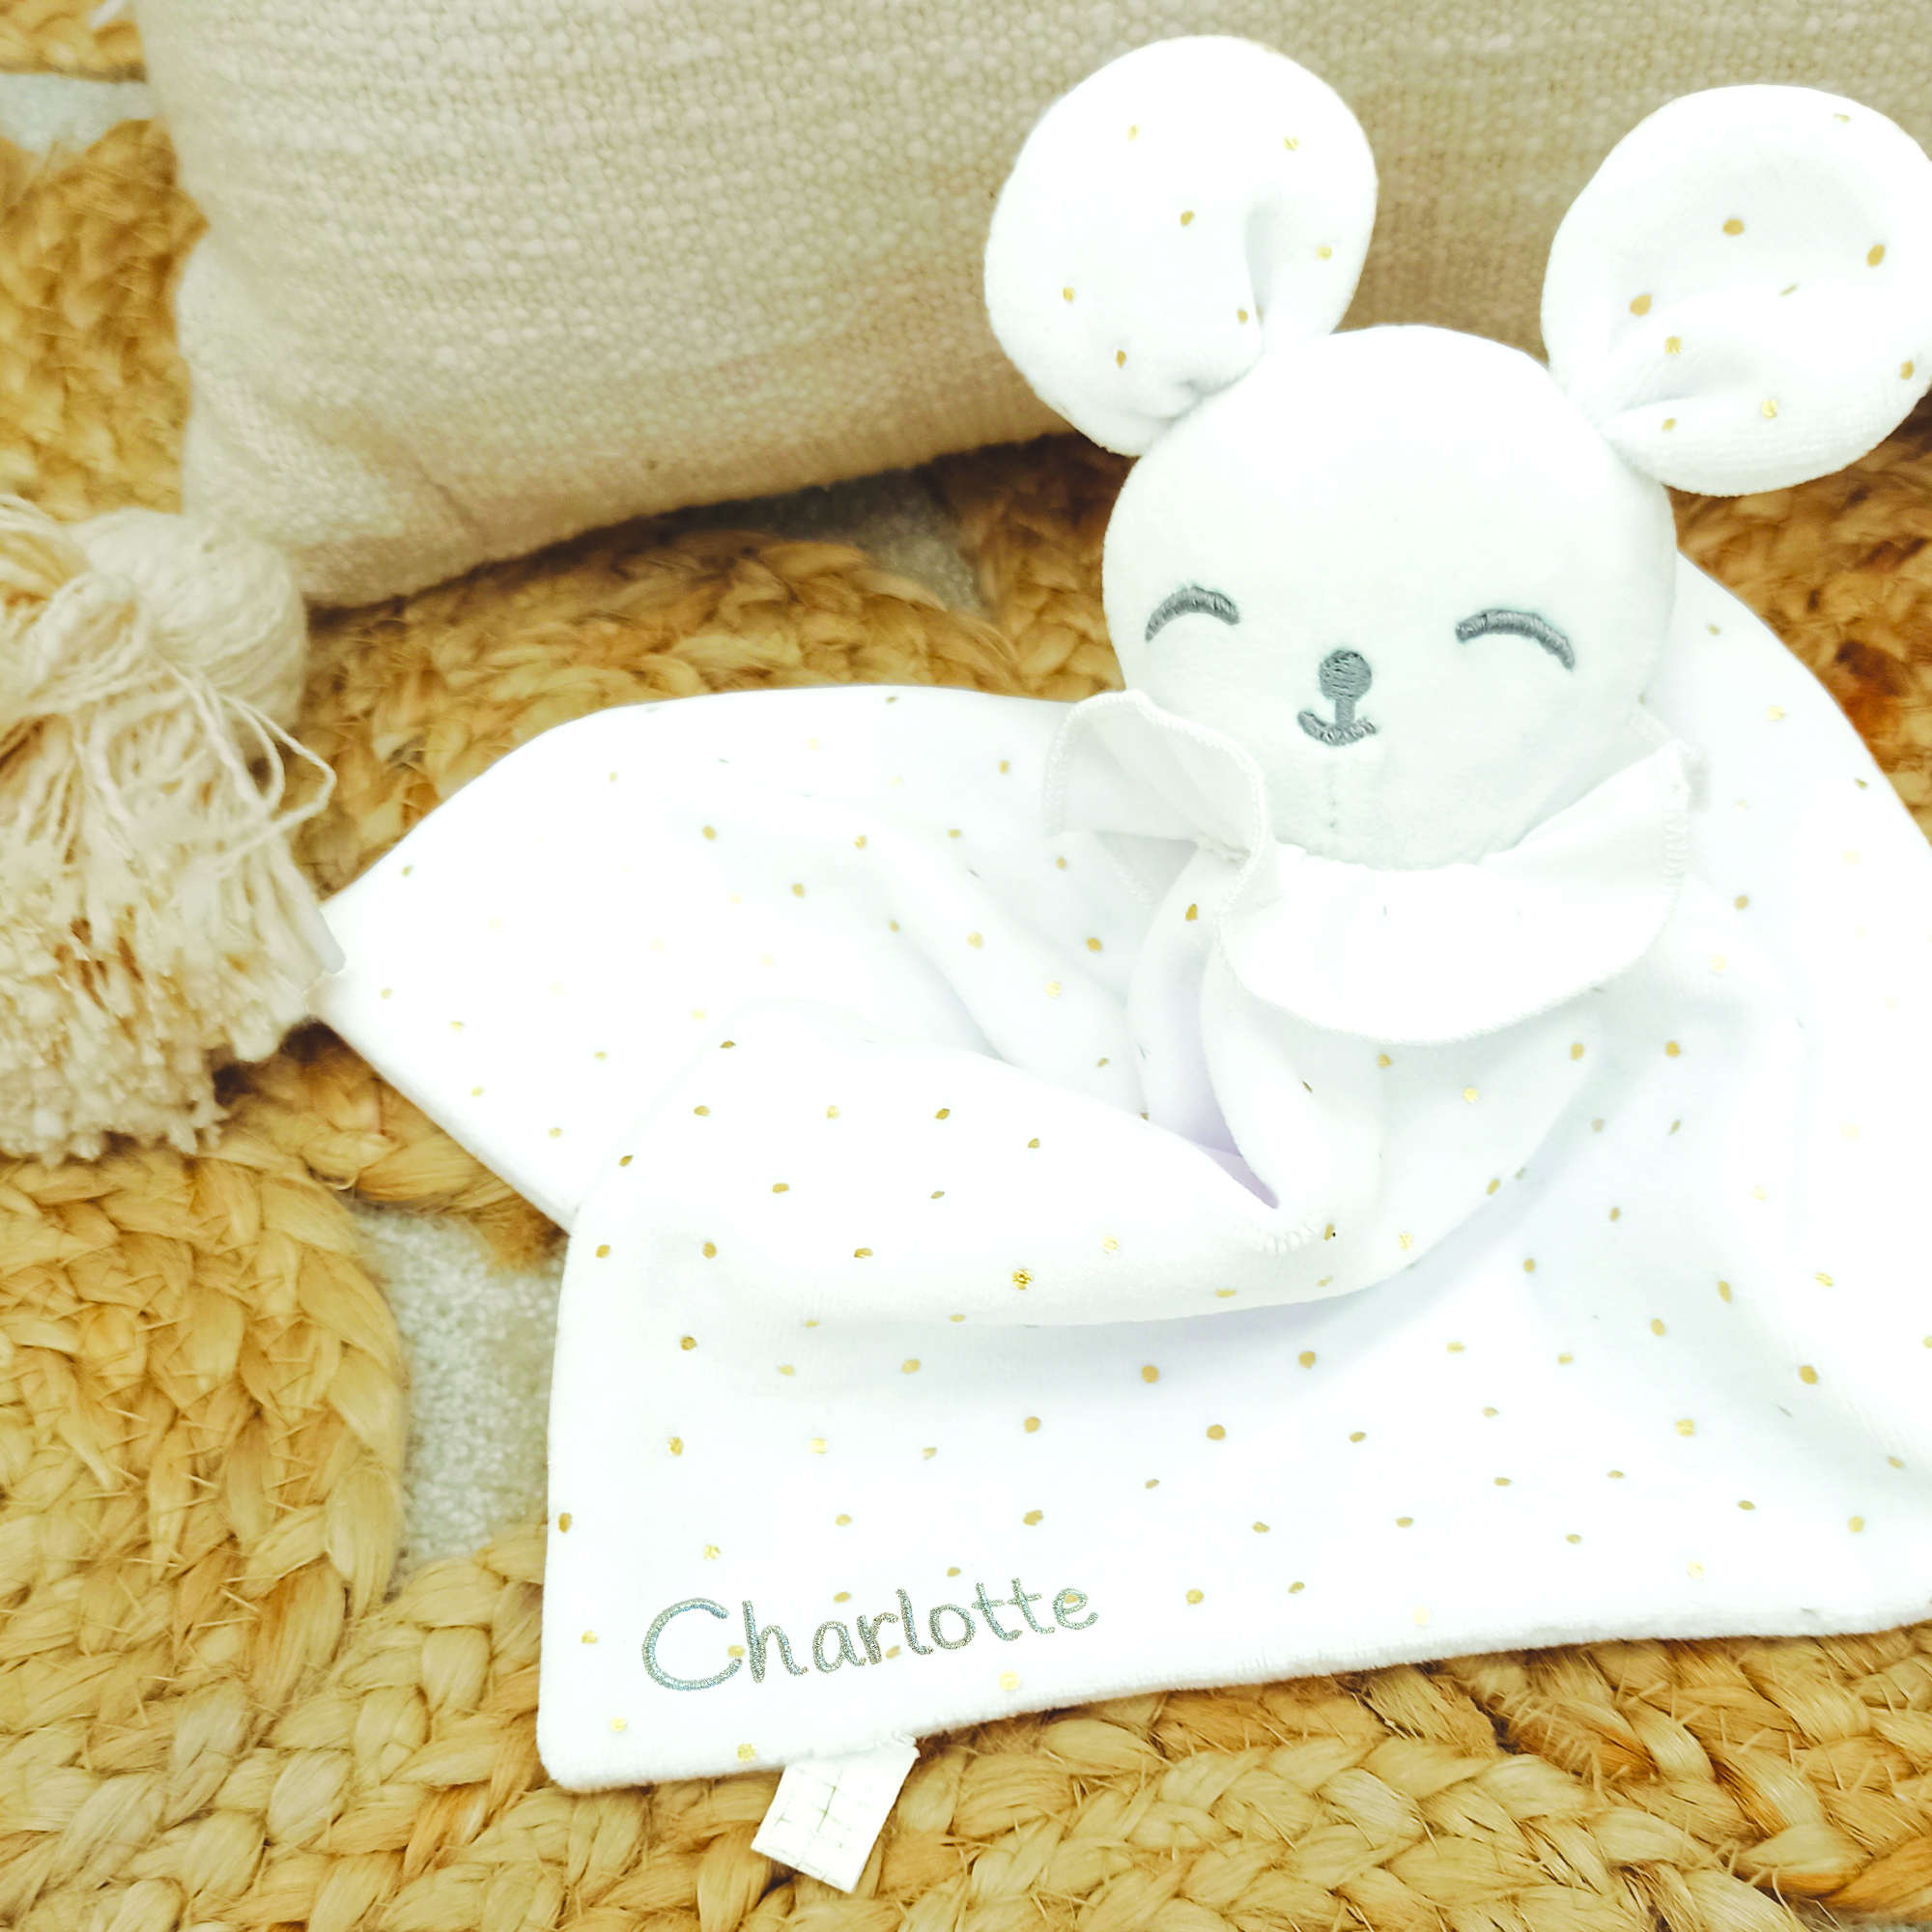 Polka dot mouse comforter CARREMENT BEAU for GIRL